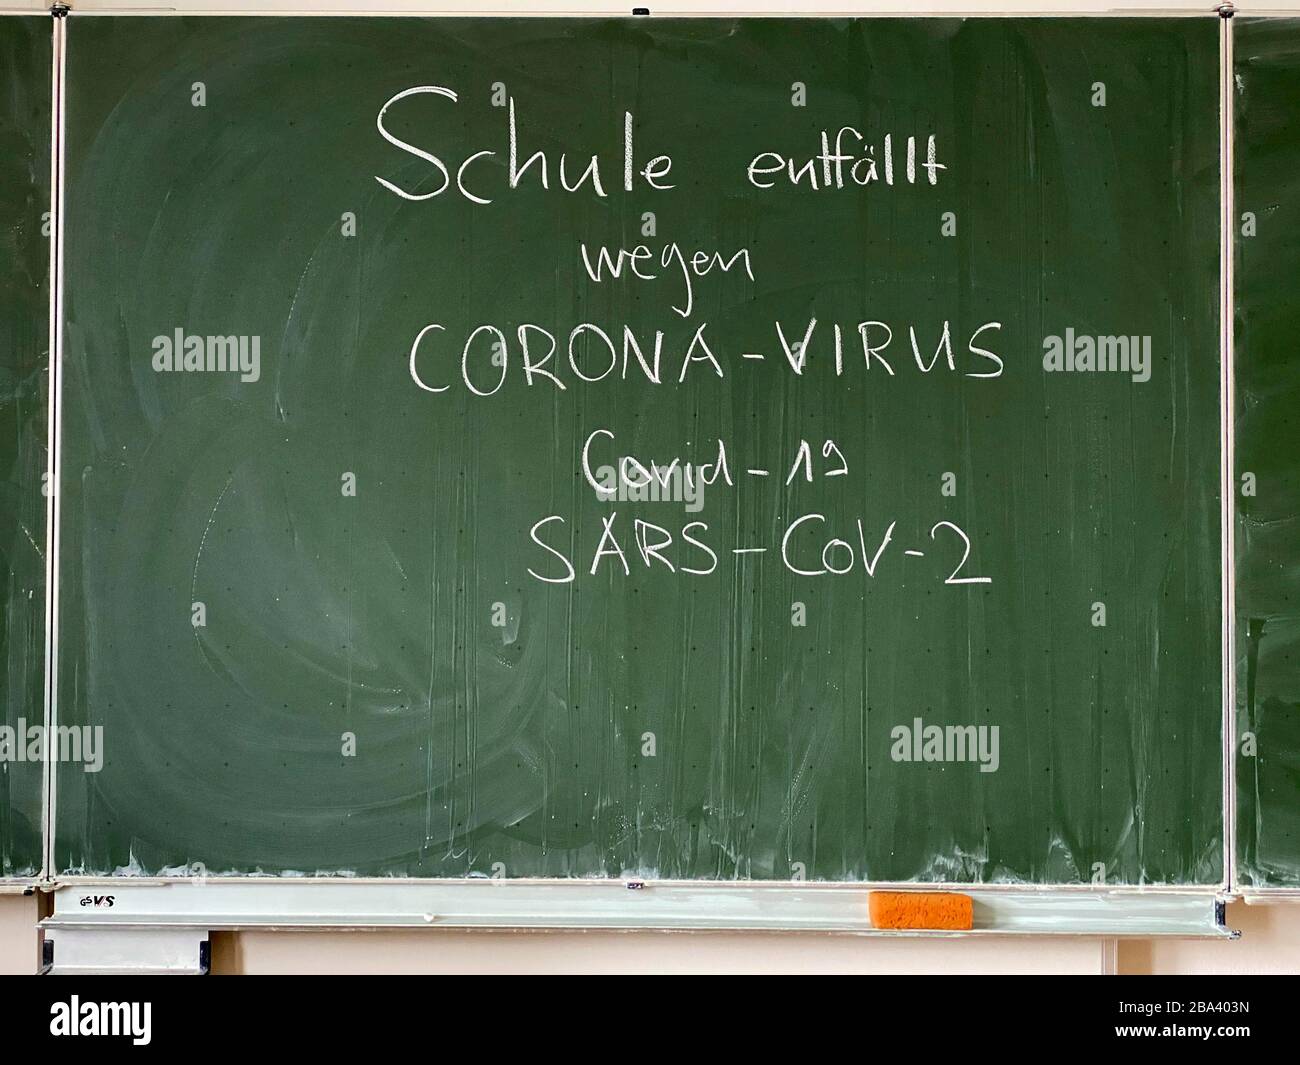 School cancelled due to coronavirus, empty classroom, Germany Stock Photo